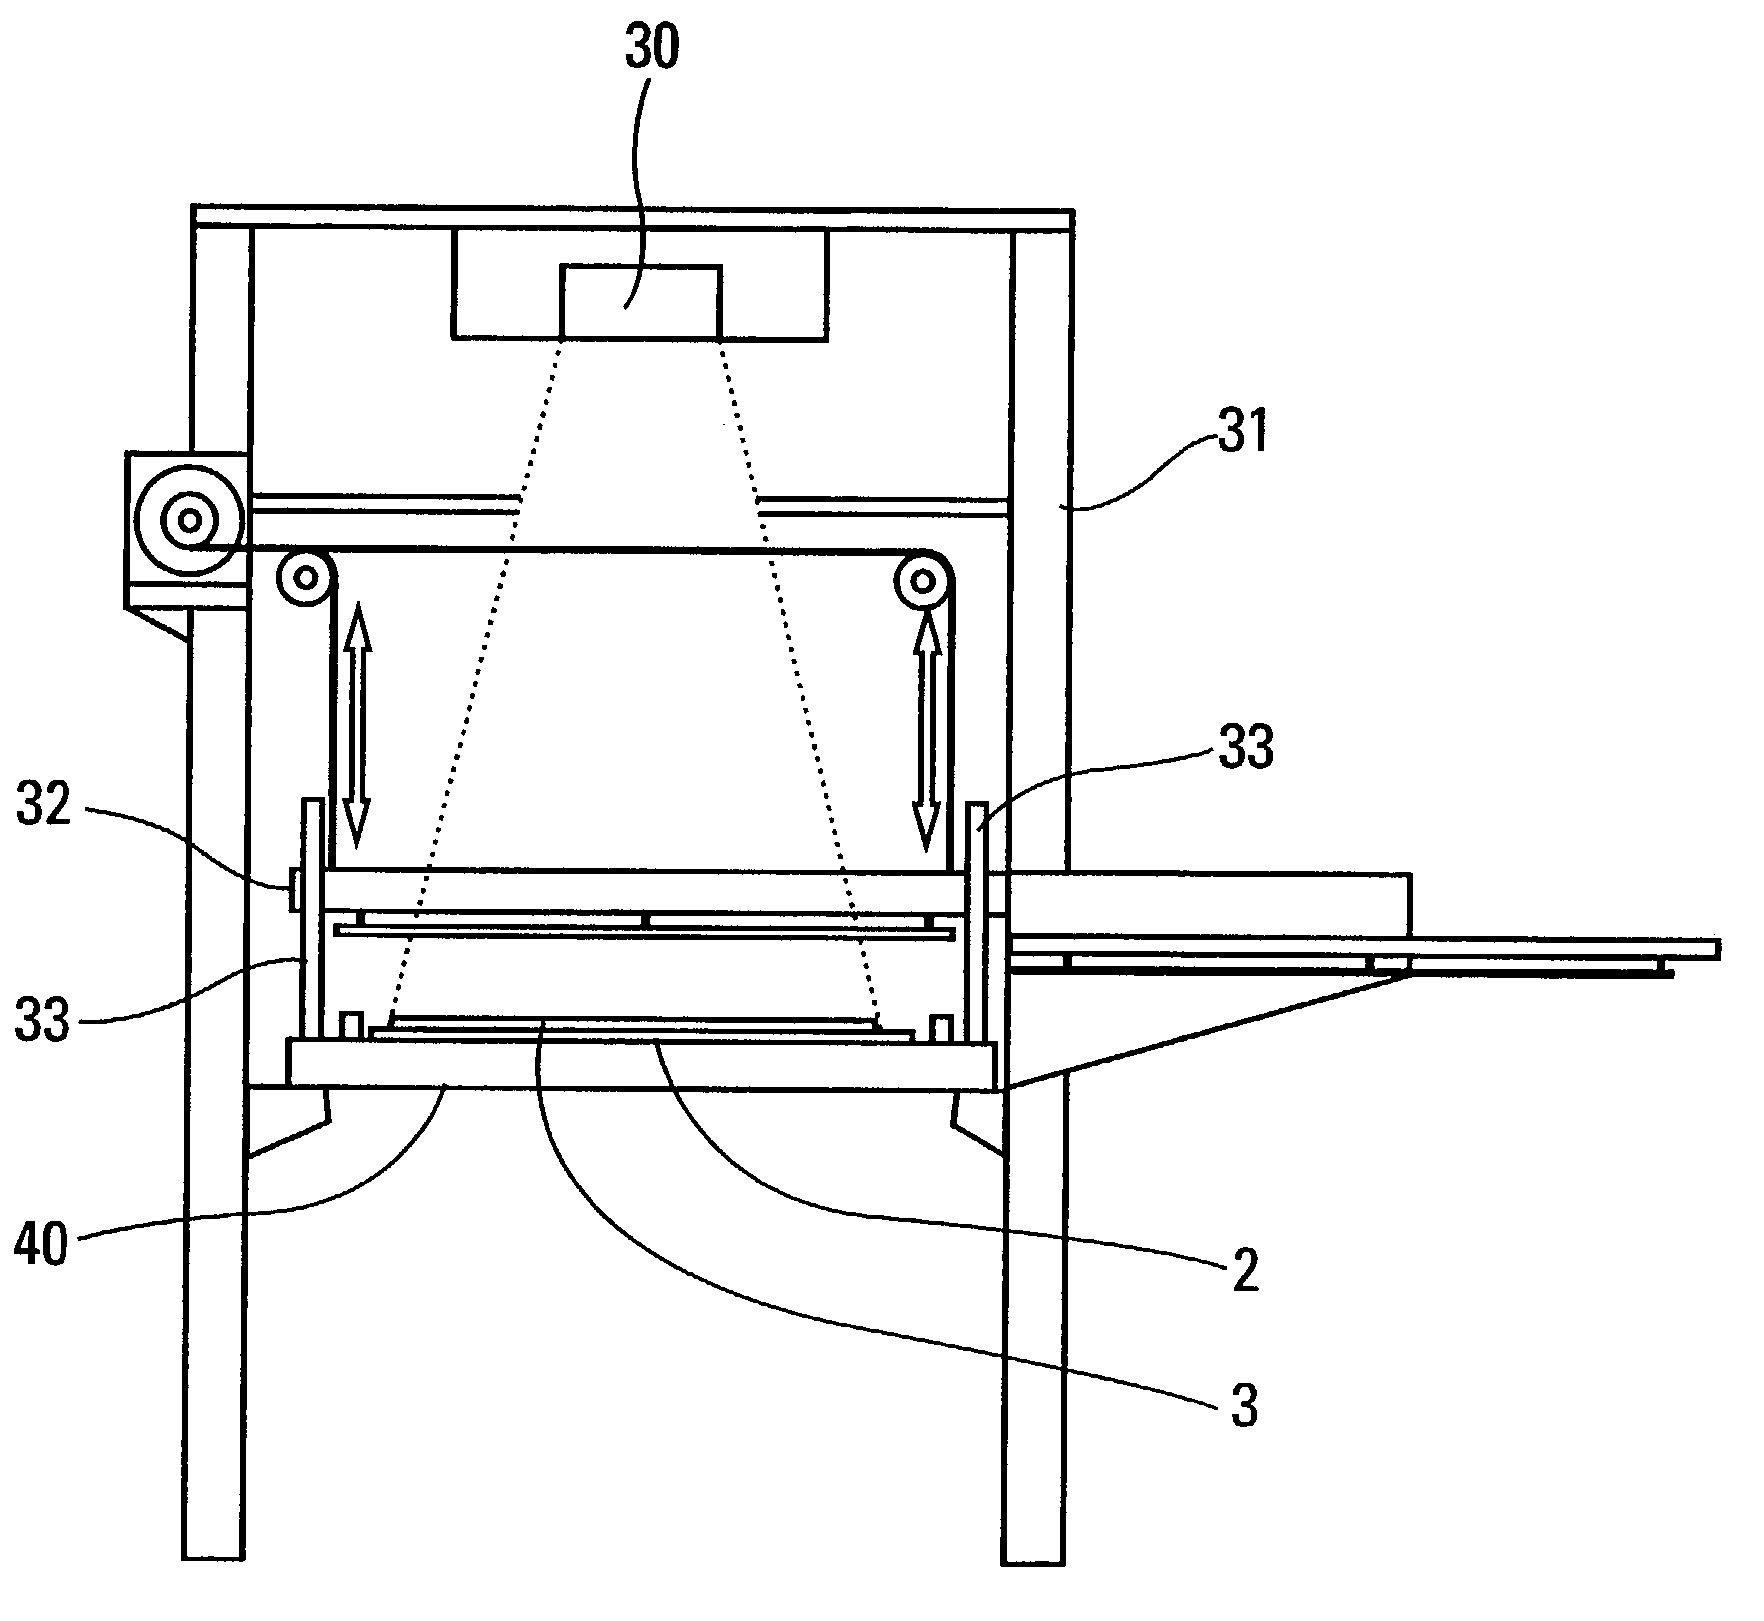 Method of manufacturing print belts